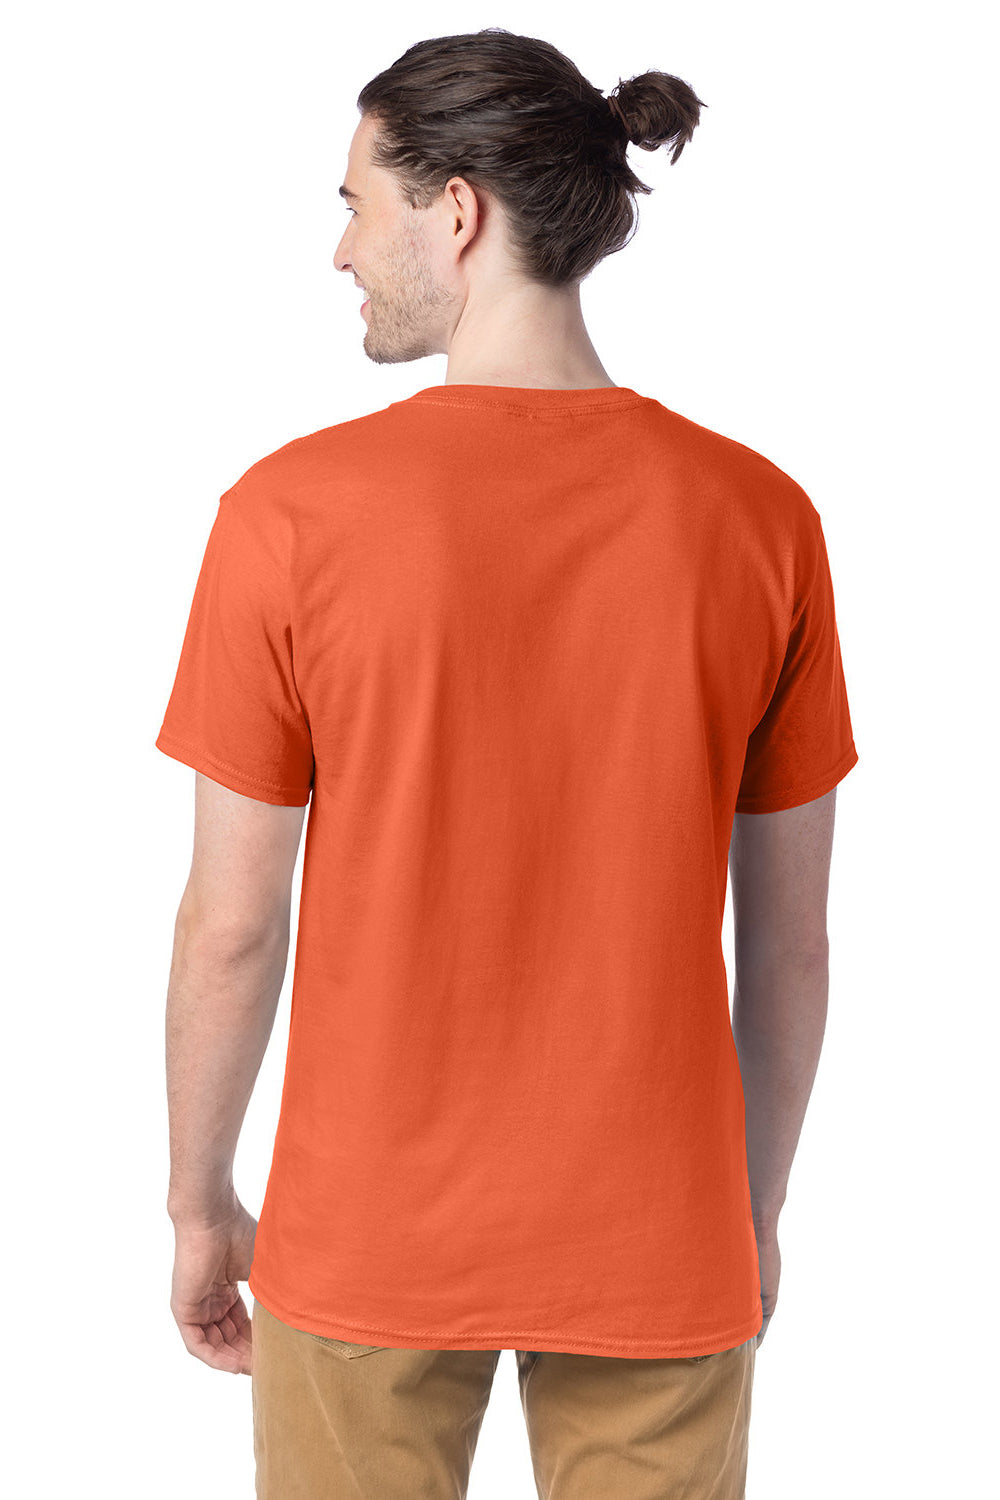 Hanes 5280 Mens ComfortSoft Short Sleeve Crewneck T-Shirt Texas Orange Back